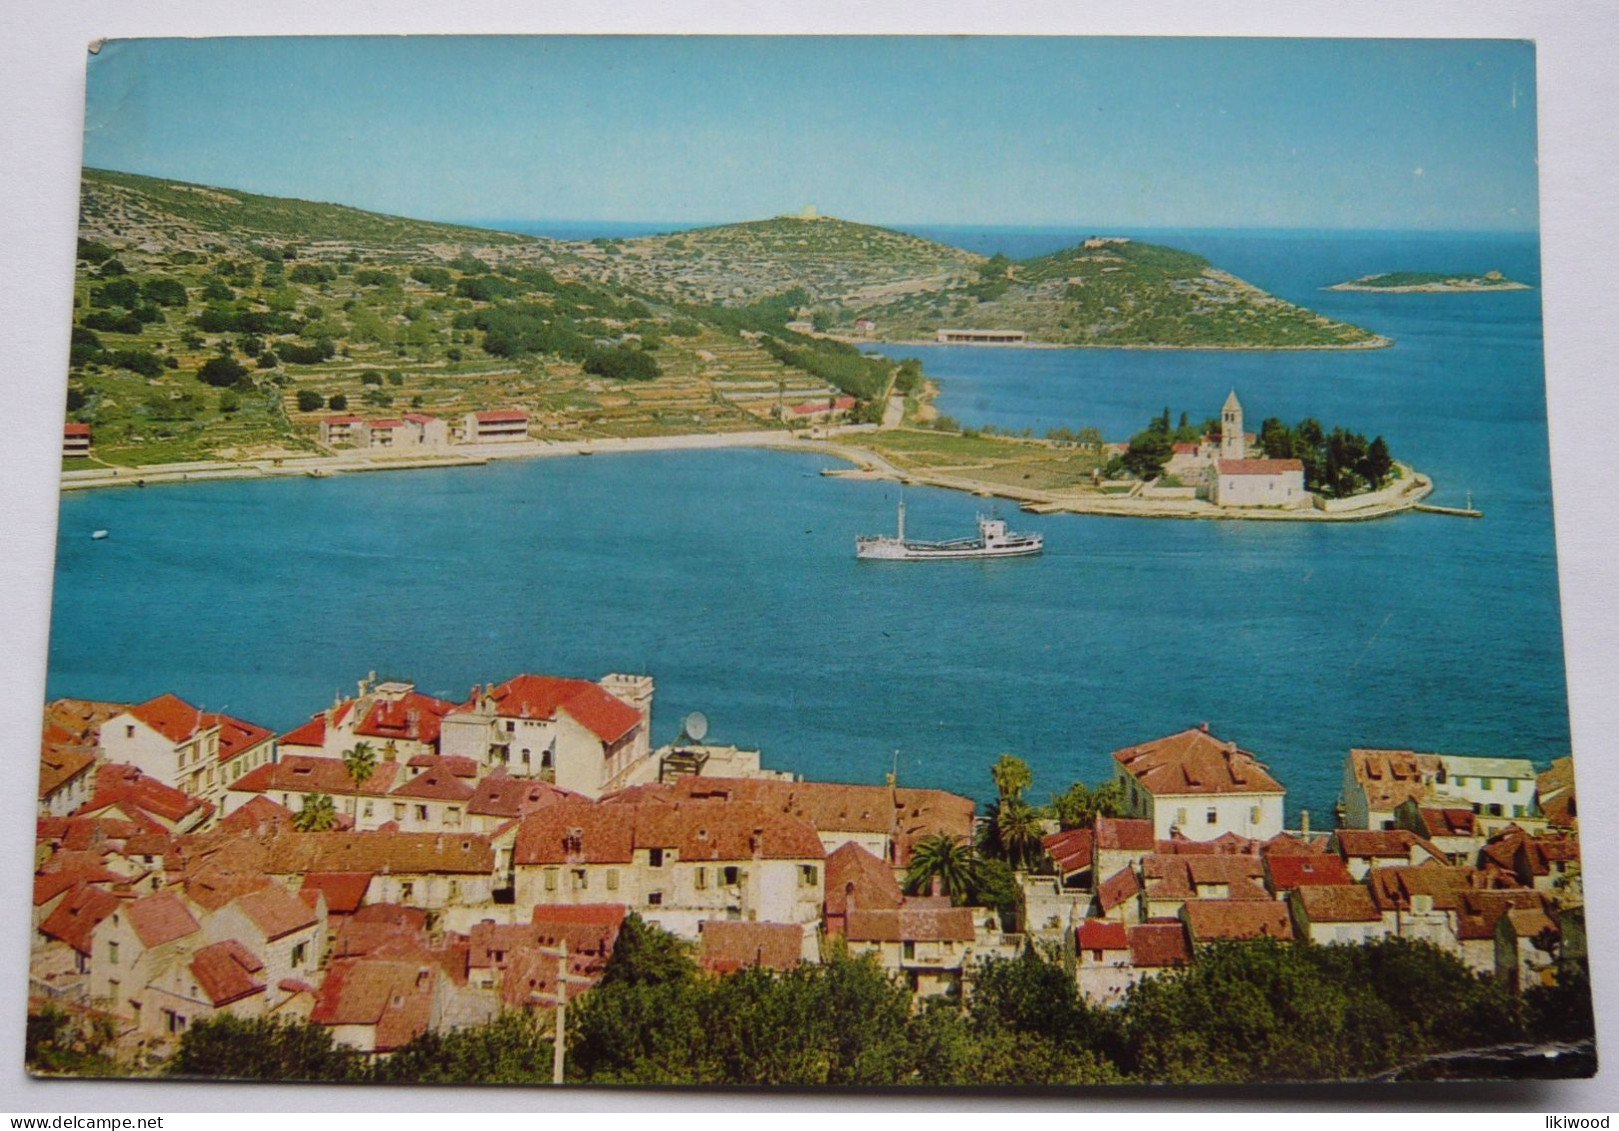 Otok Vis (Island Vis) - Kroatien